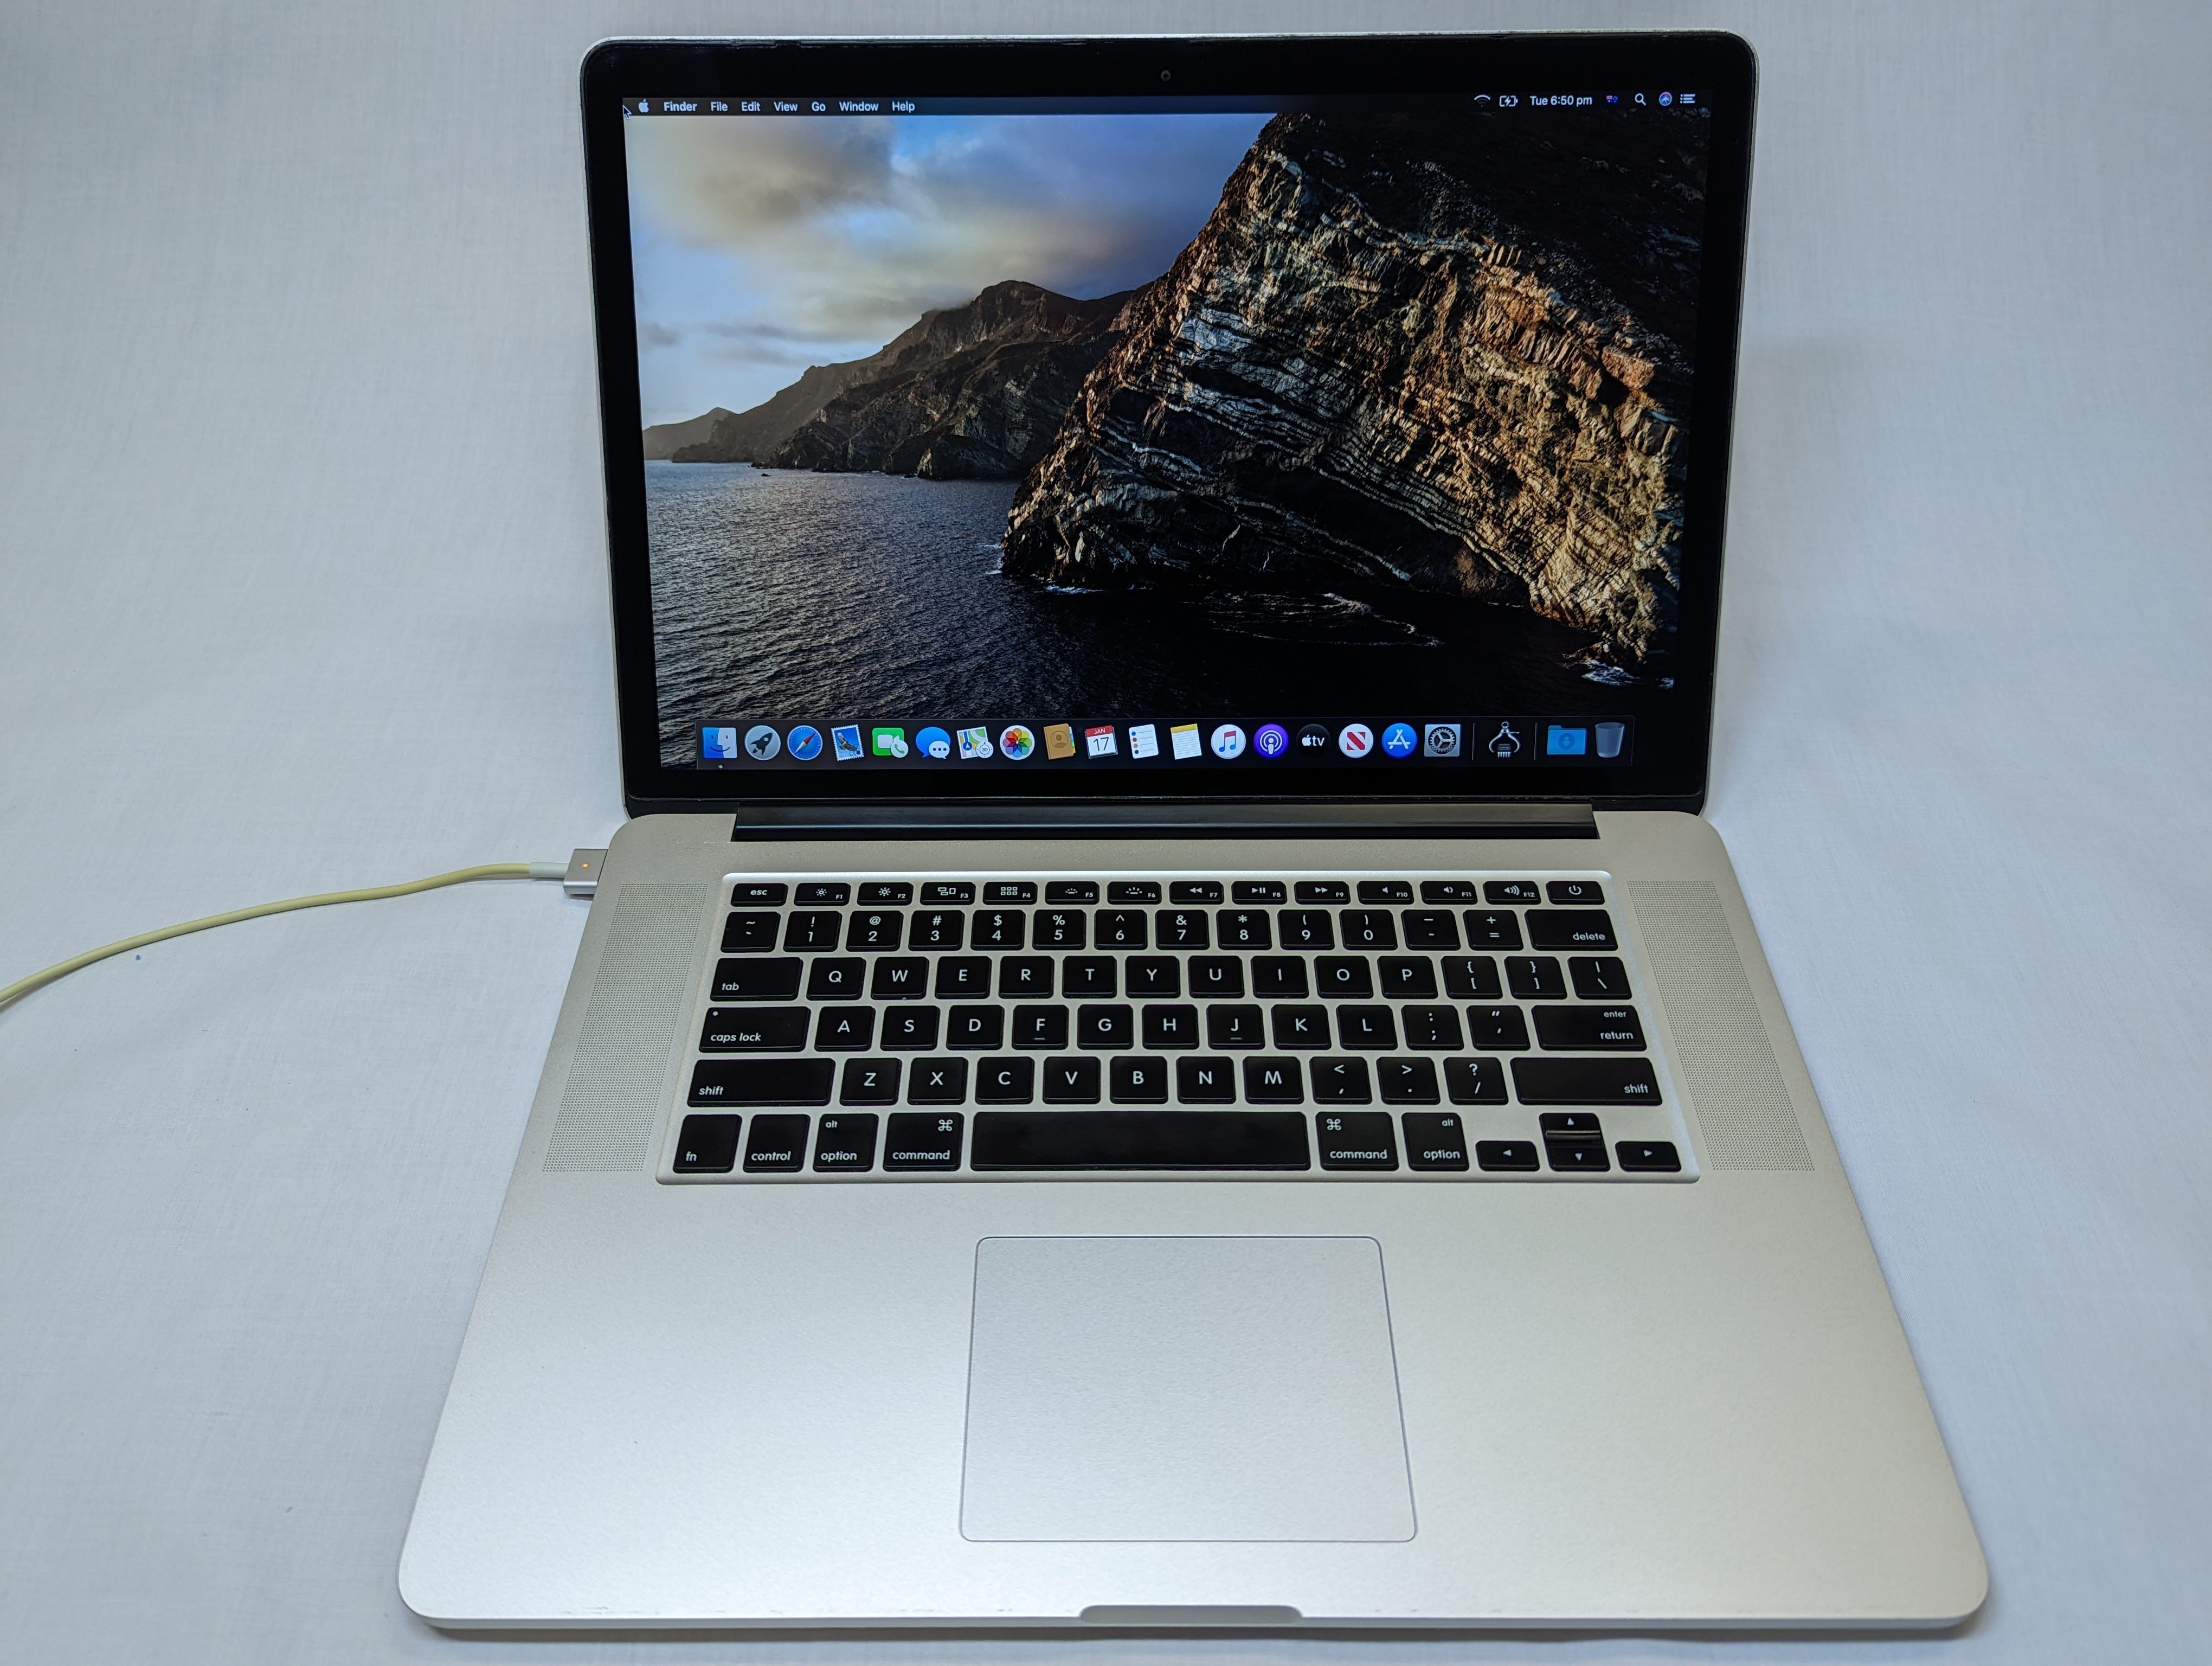 MacBook Pro Retina 15 inch (Early 2013) - i7, 8GB RAM, 256GB